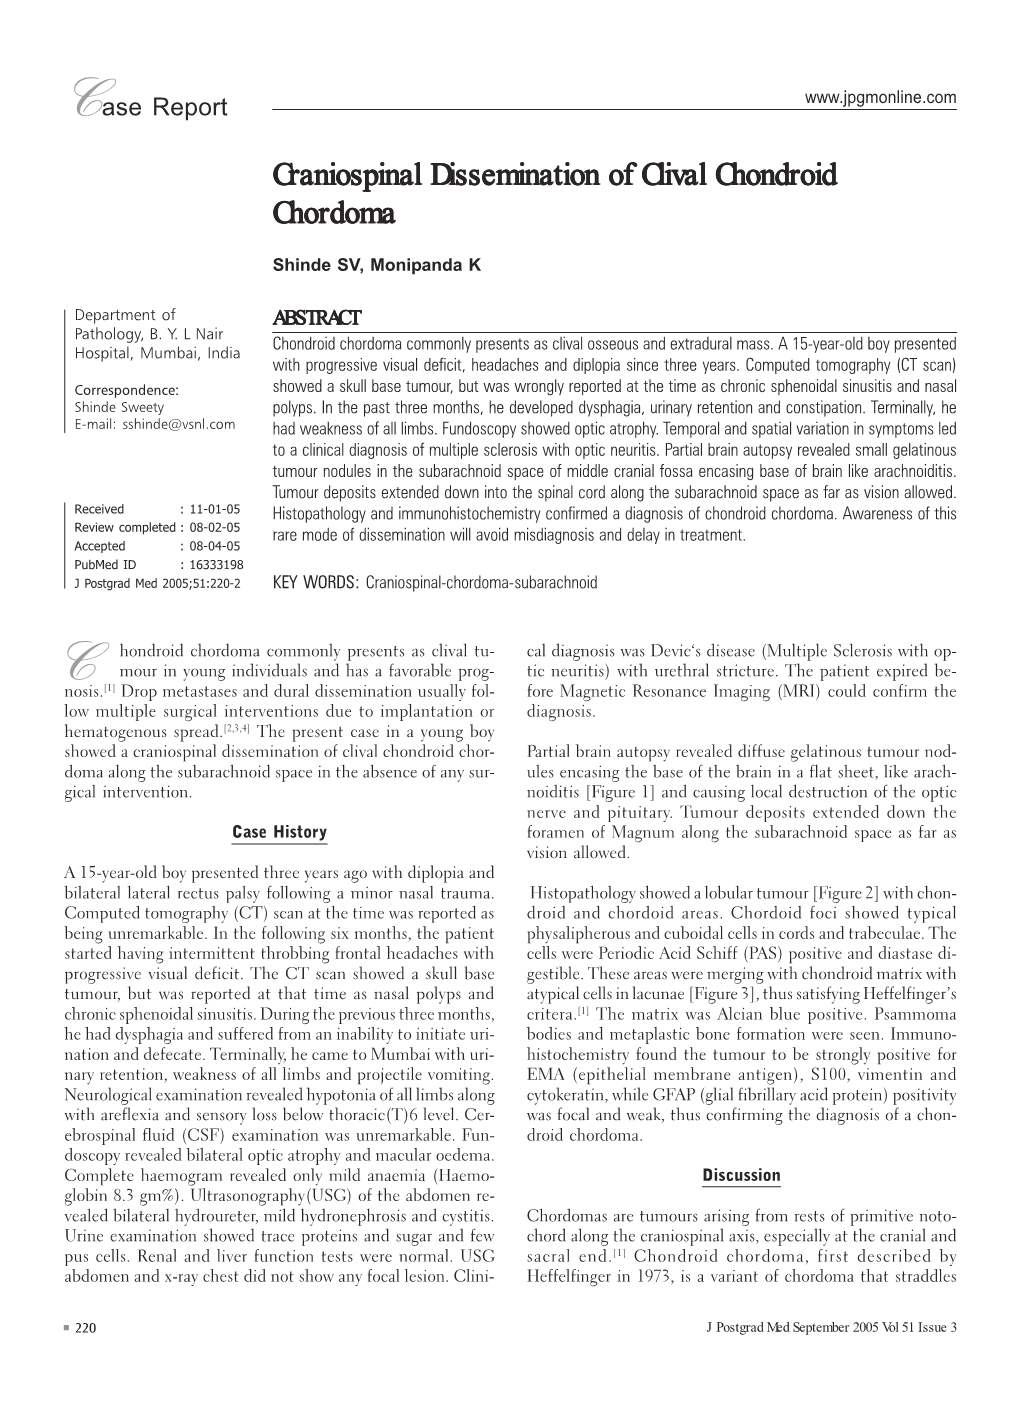 Craniospinal Dissemination of Clival Chondroid Chordoma